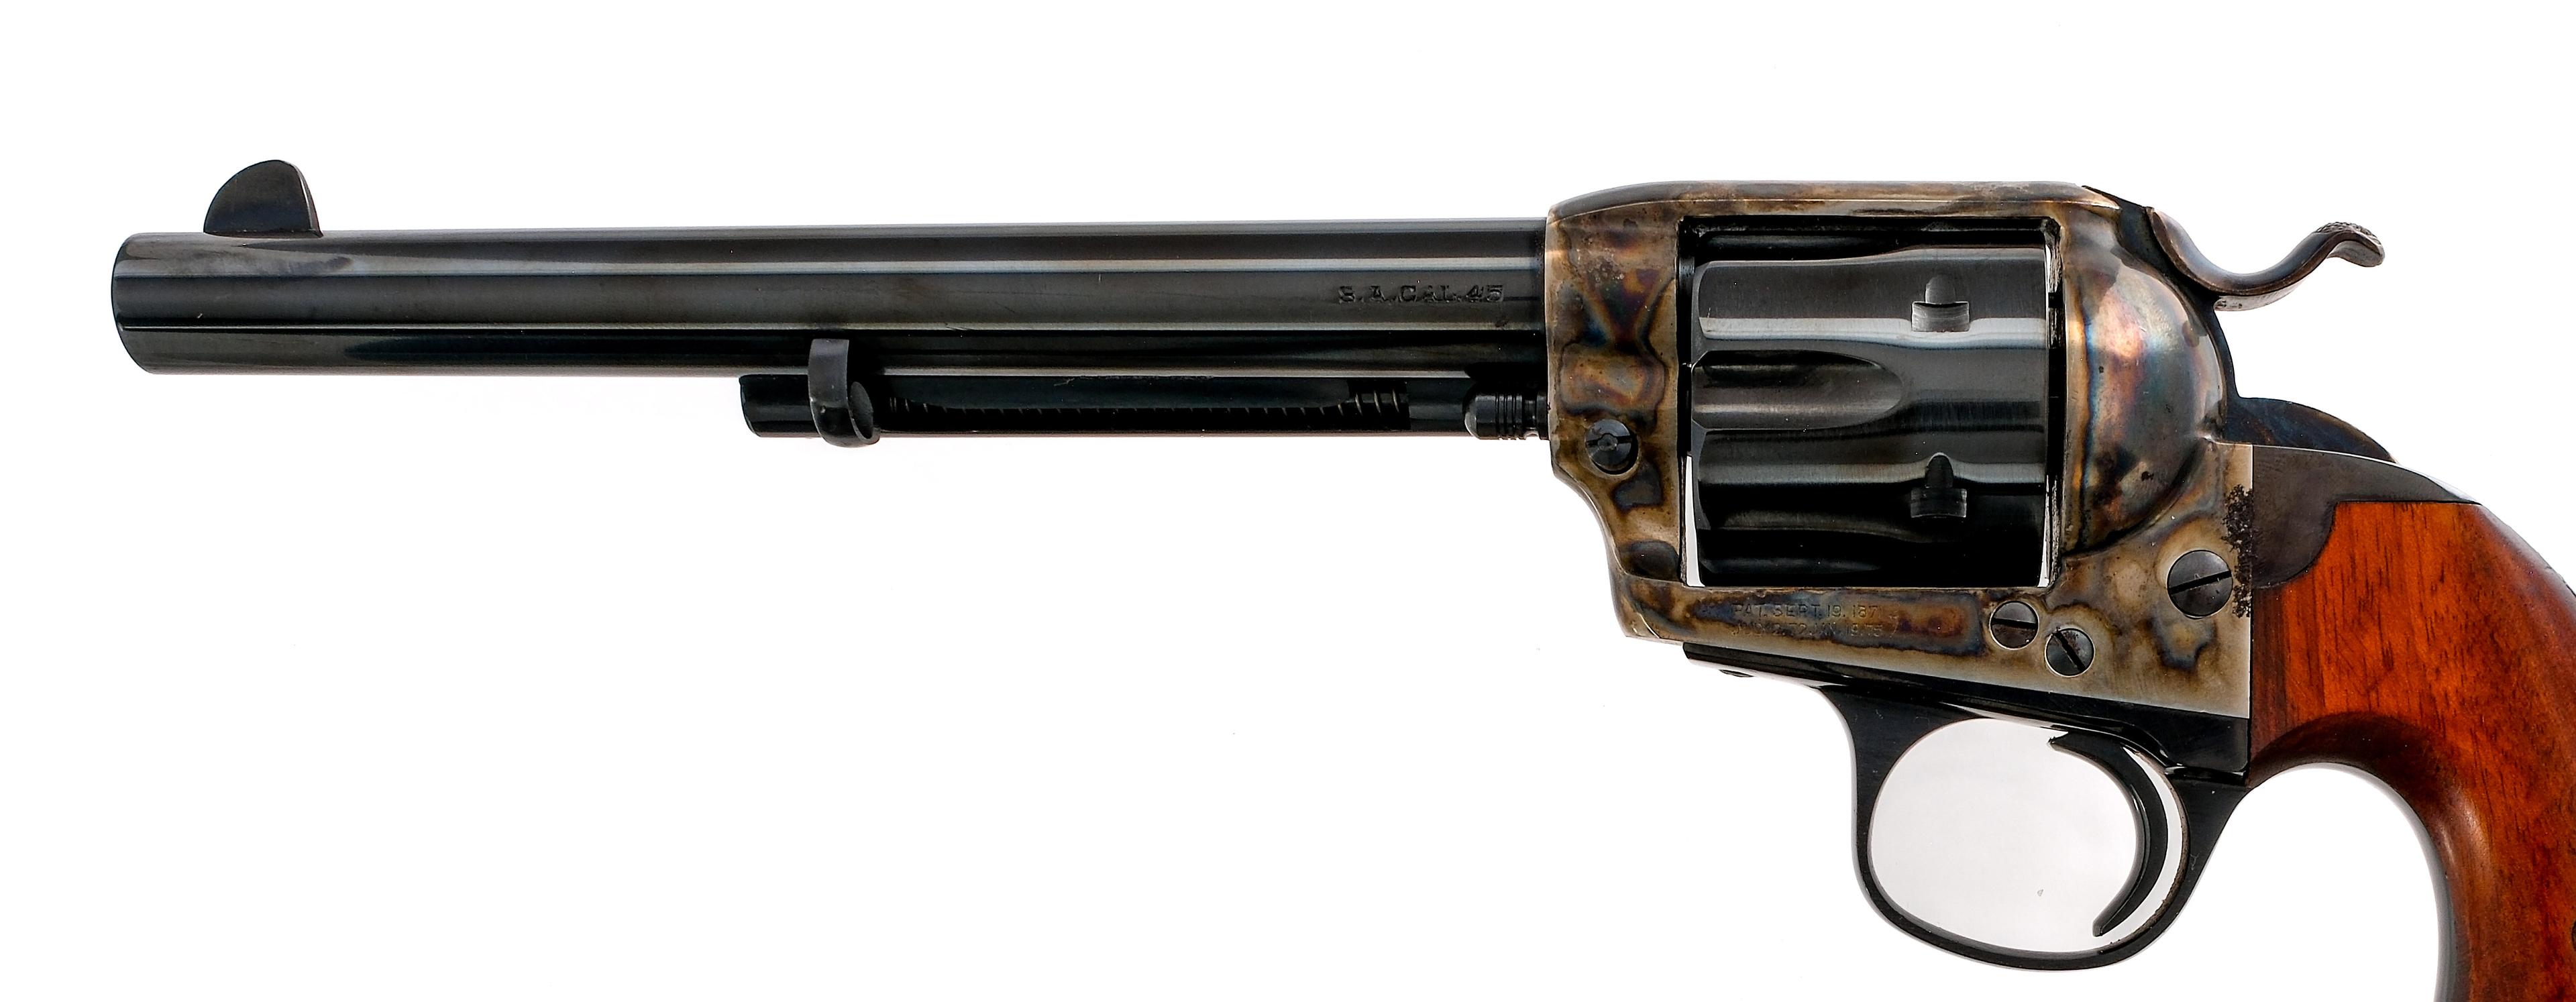 Uberti 1873 Bisley .45 Colt Single Action Revolver